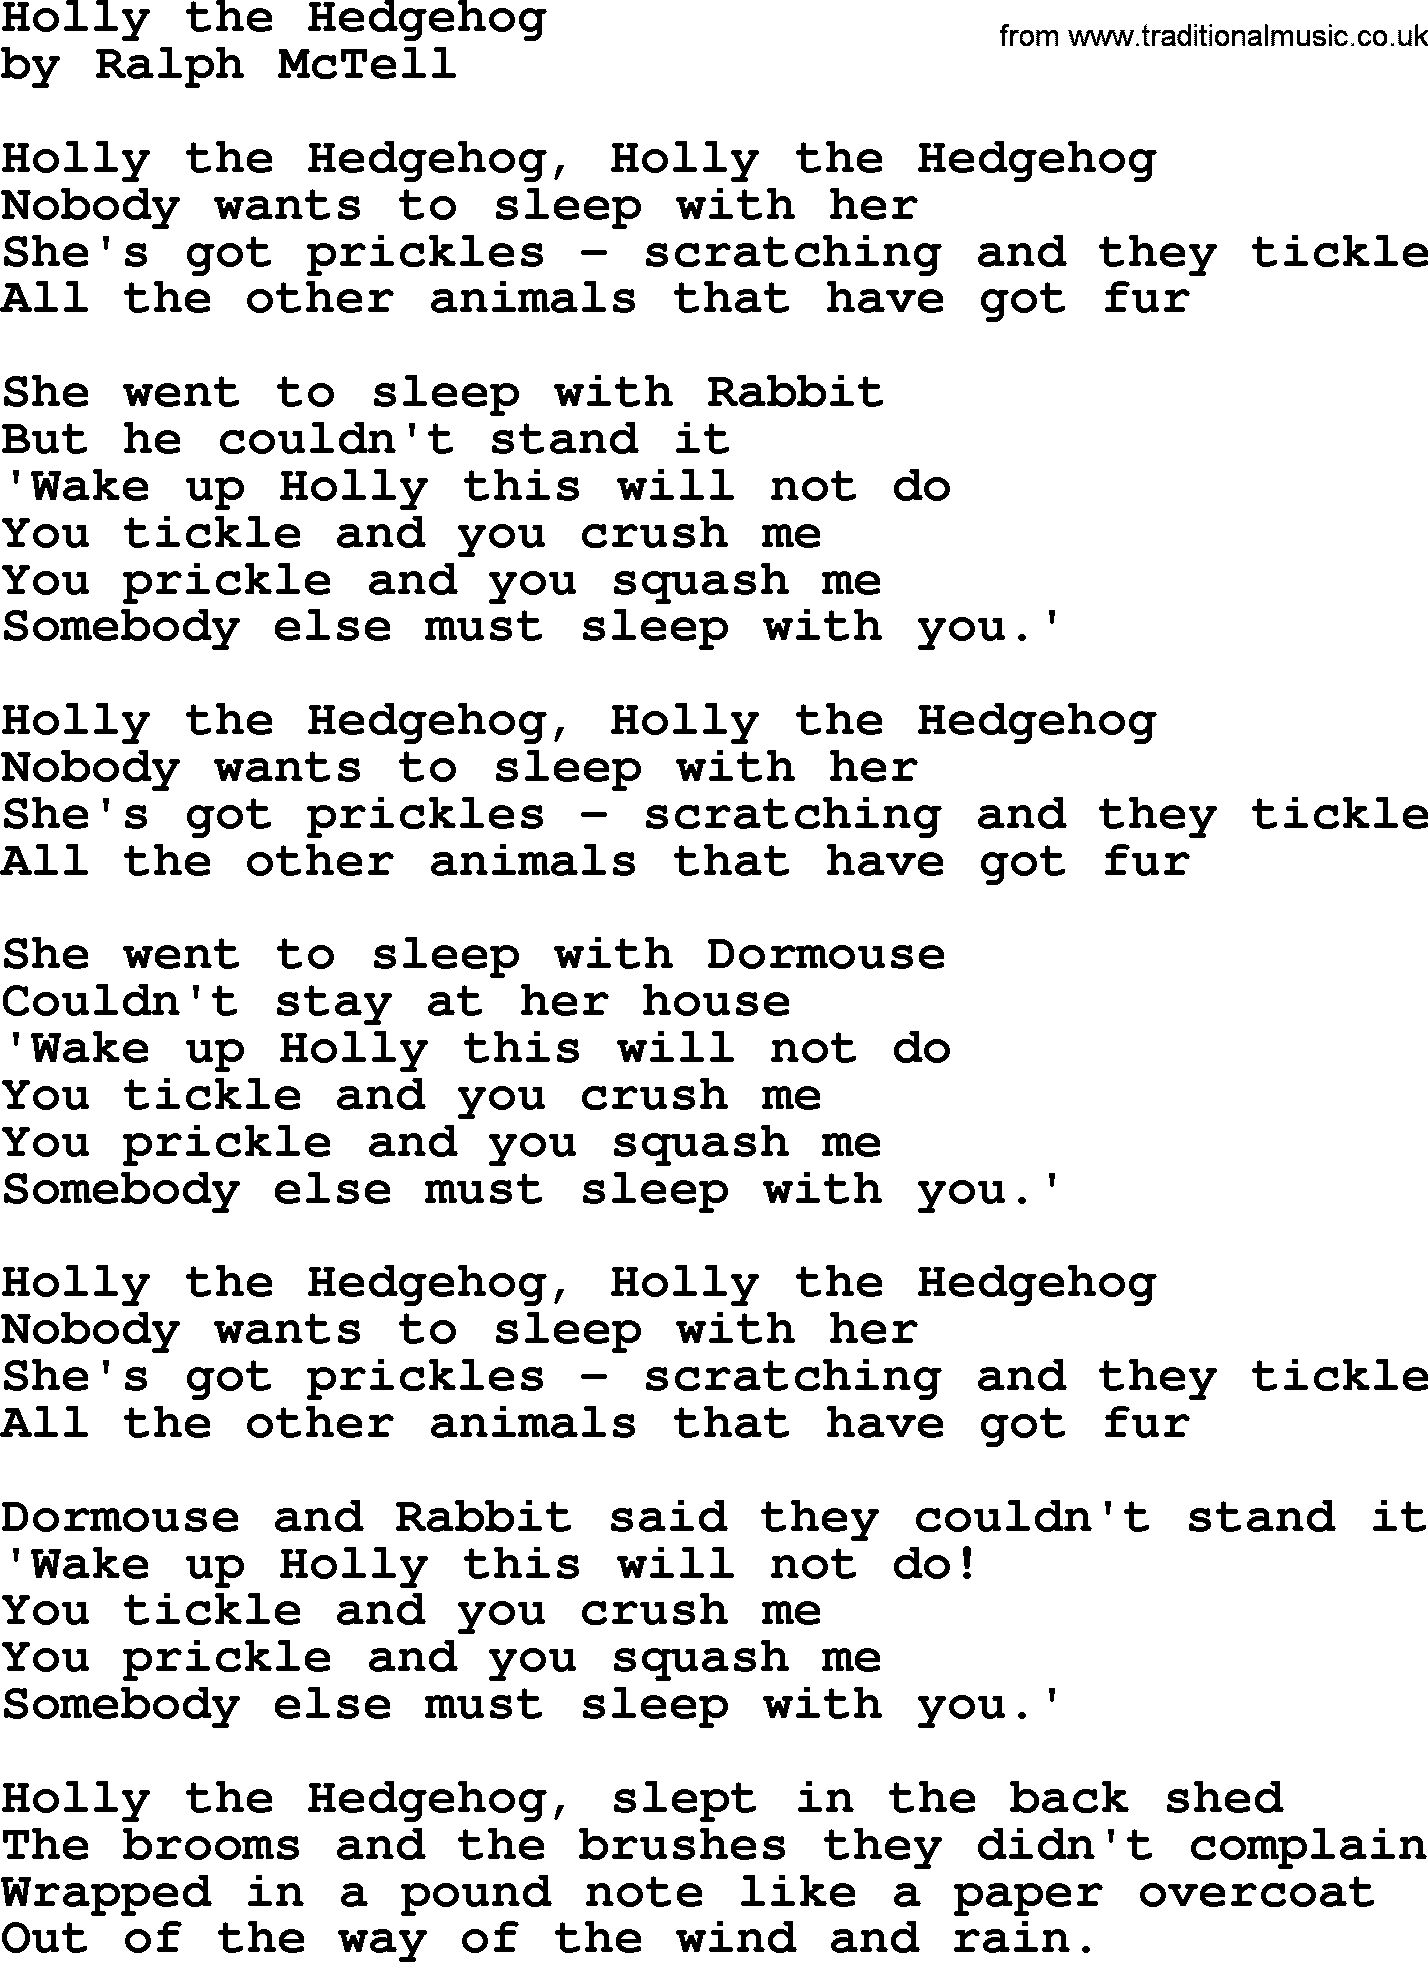 Ralph McTell Song: Holly The Hedgehog, lyrics